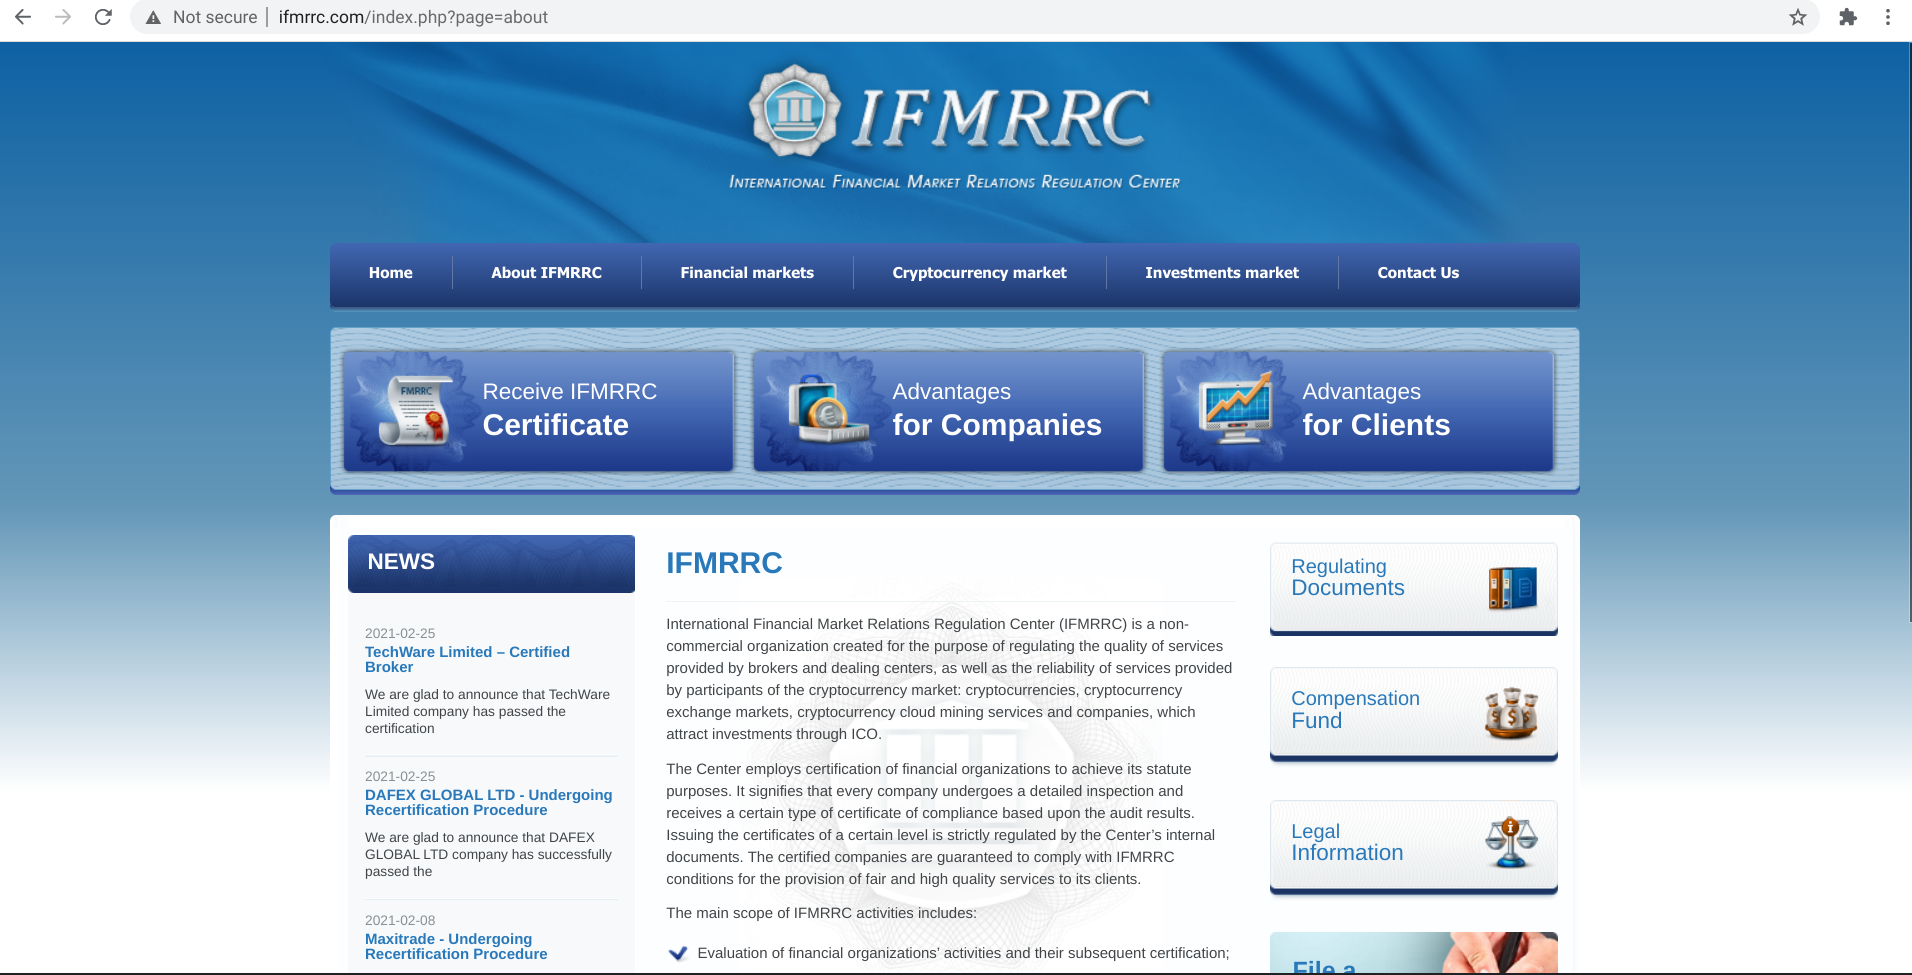 Screenshot of organization called International Financial Market Relations Regulation Center, or IFMRRC